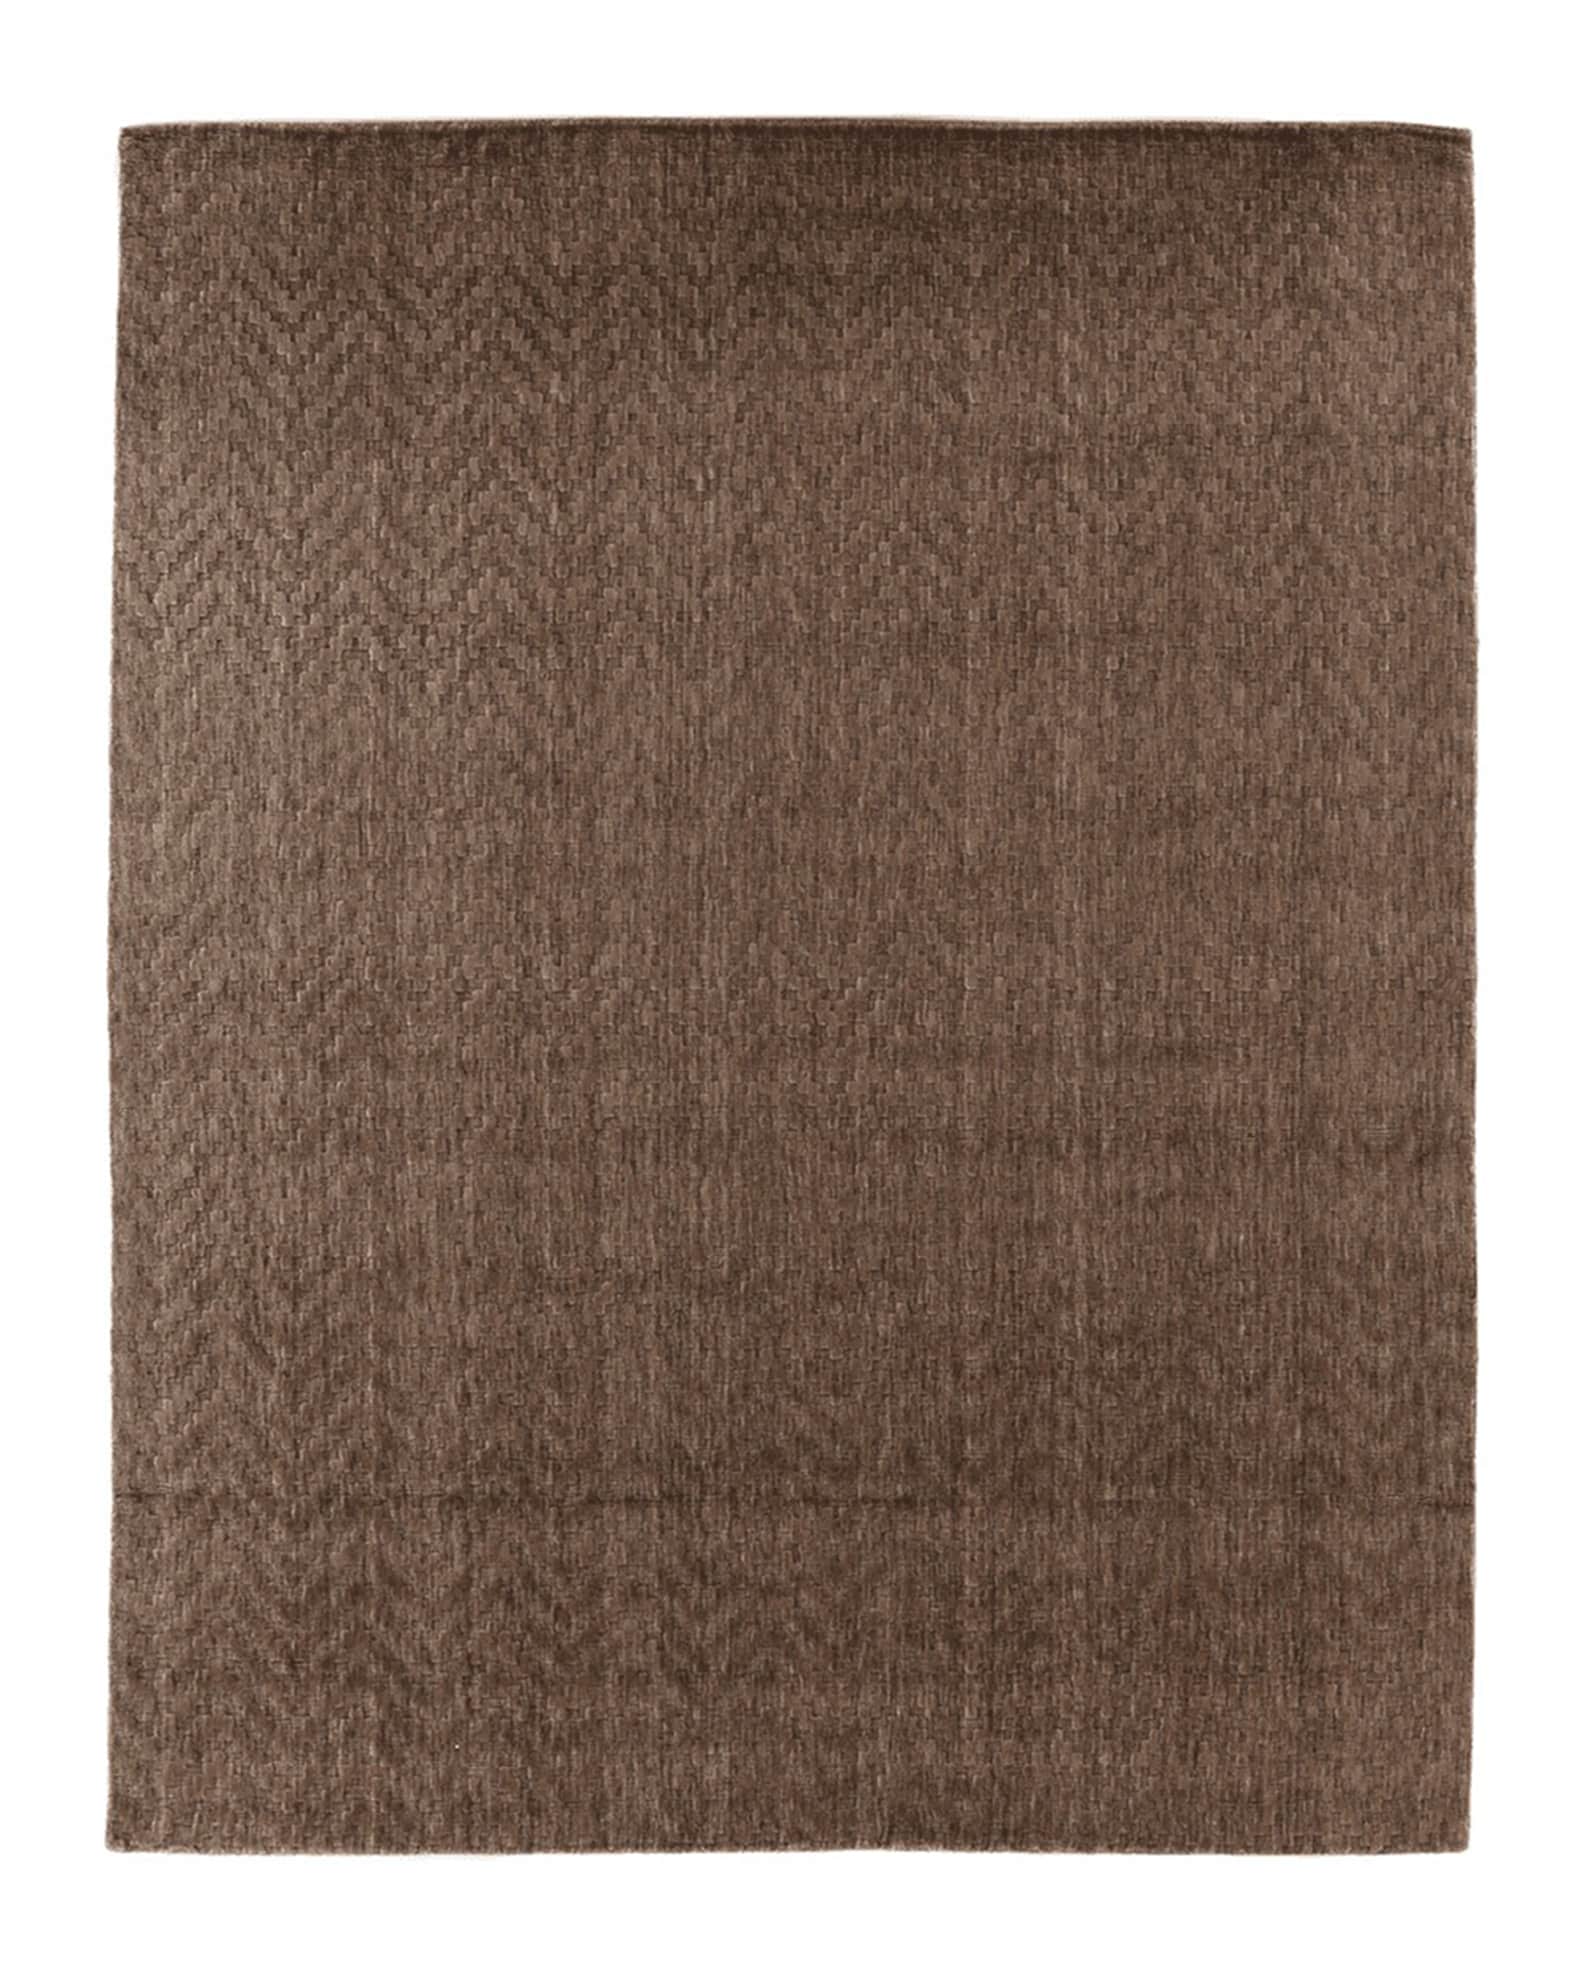 Exquisite Rugs Freebush Hand-Loomed Rug, 6' x 9' | Neiman Marcus